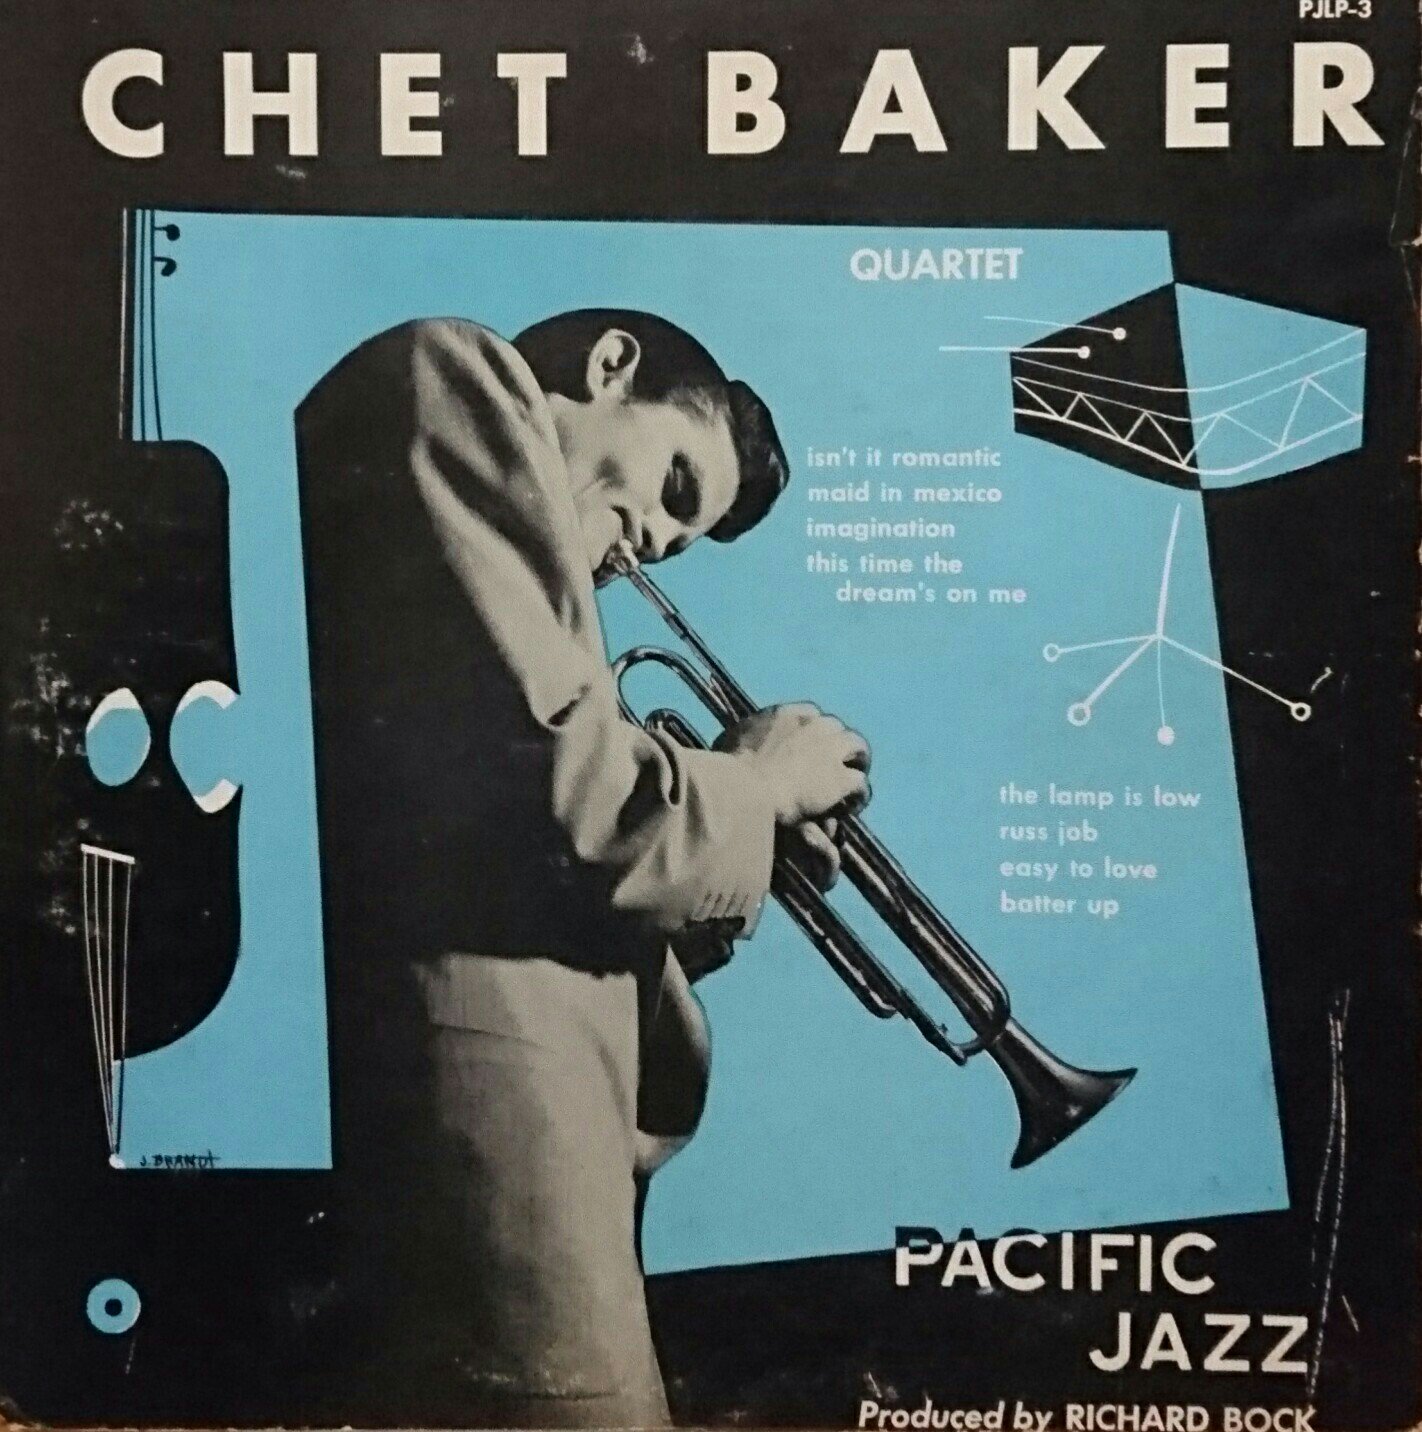 Ogigi チェット ベイカーの誕生日 Us Pacific Pjlp 3 Chet Baker Quartetの10inchlp 村上春樹氏の ポートレイト イン ジャズ に取り上げられたレコード 若い頃の演奏だけど 聴く者に共感を与える ジャケのデザインが気に入っている 私のはボロ